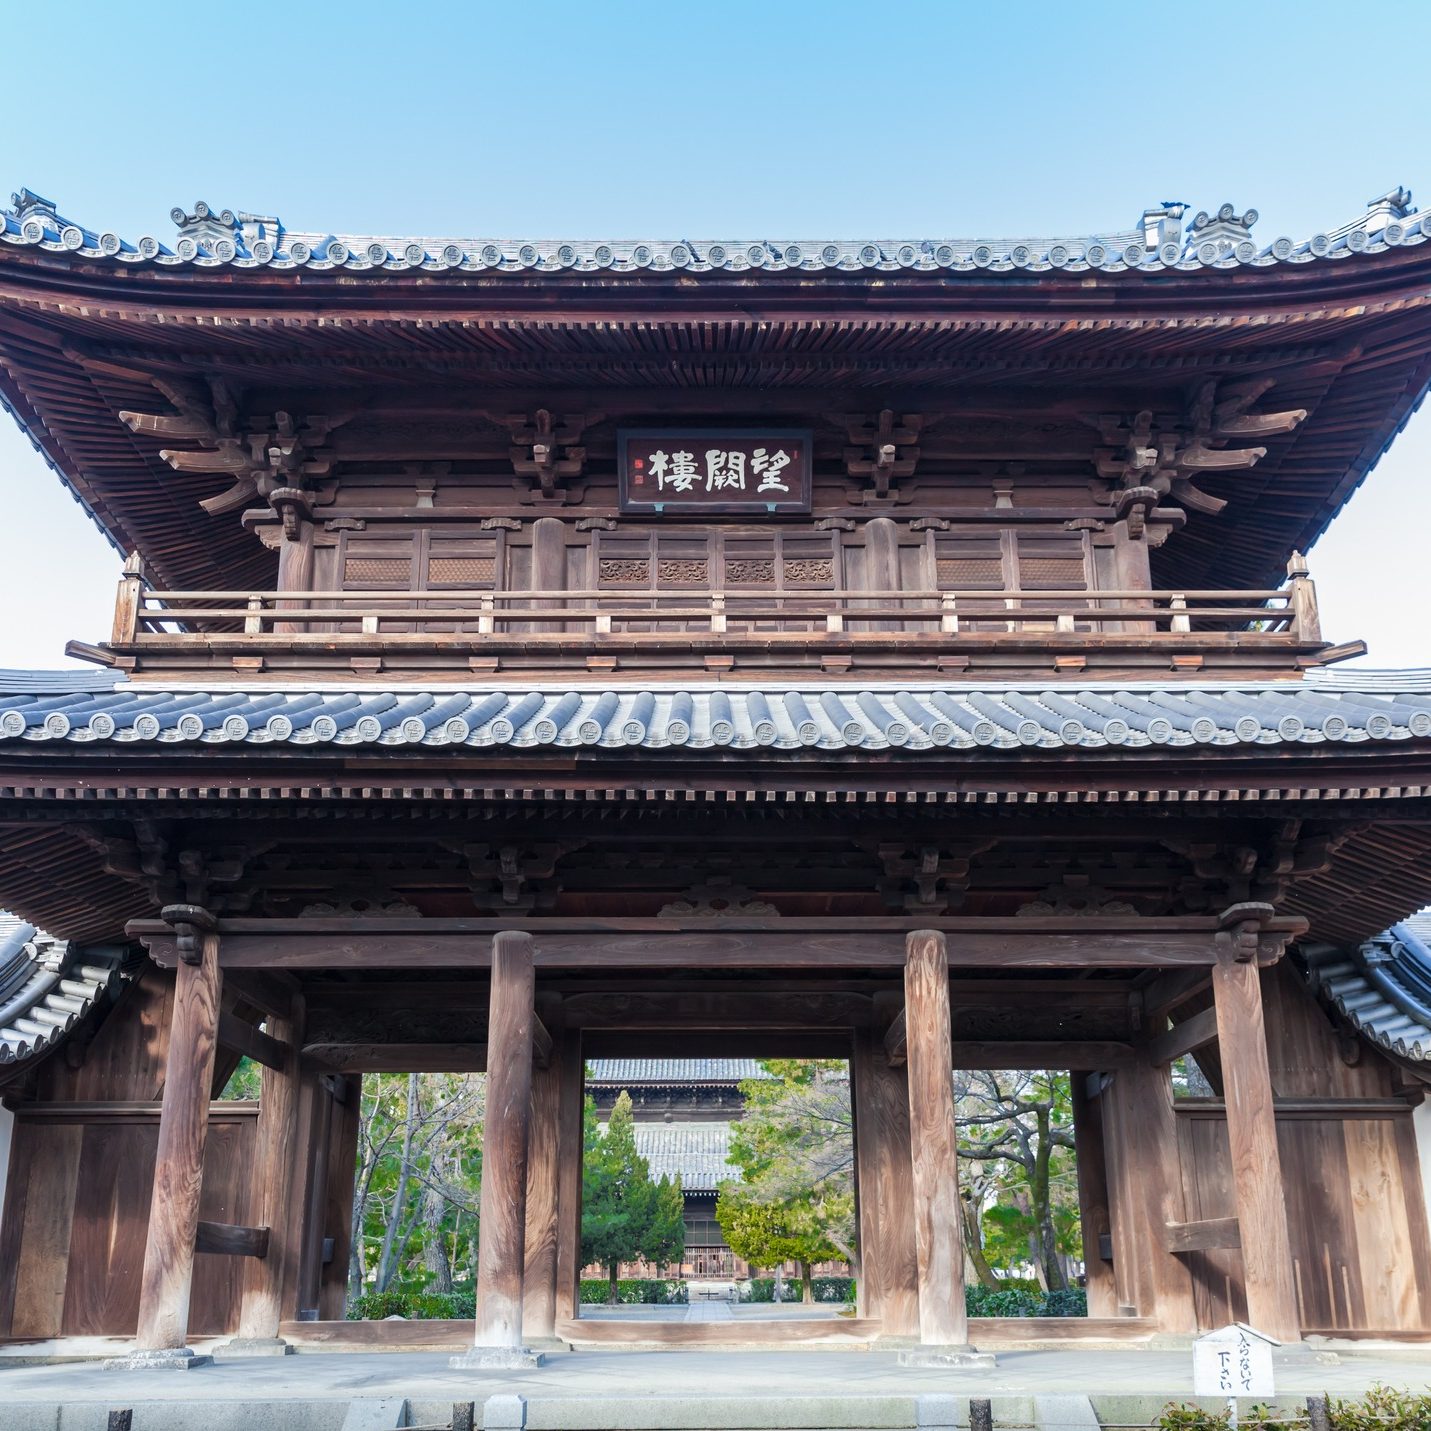 Kyoto, Japan - January 16, 2019: Gate of Kennin-ji Temple